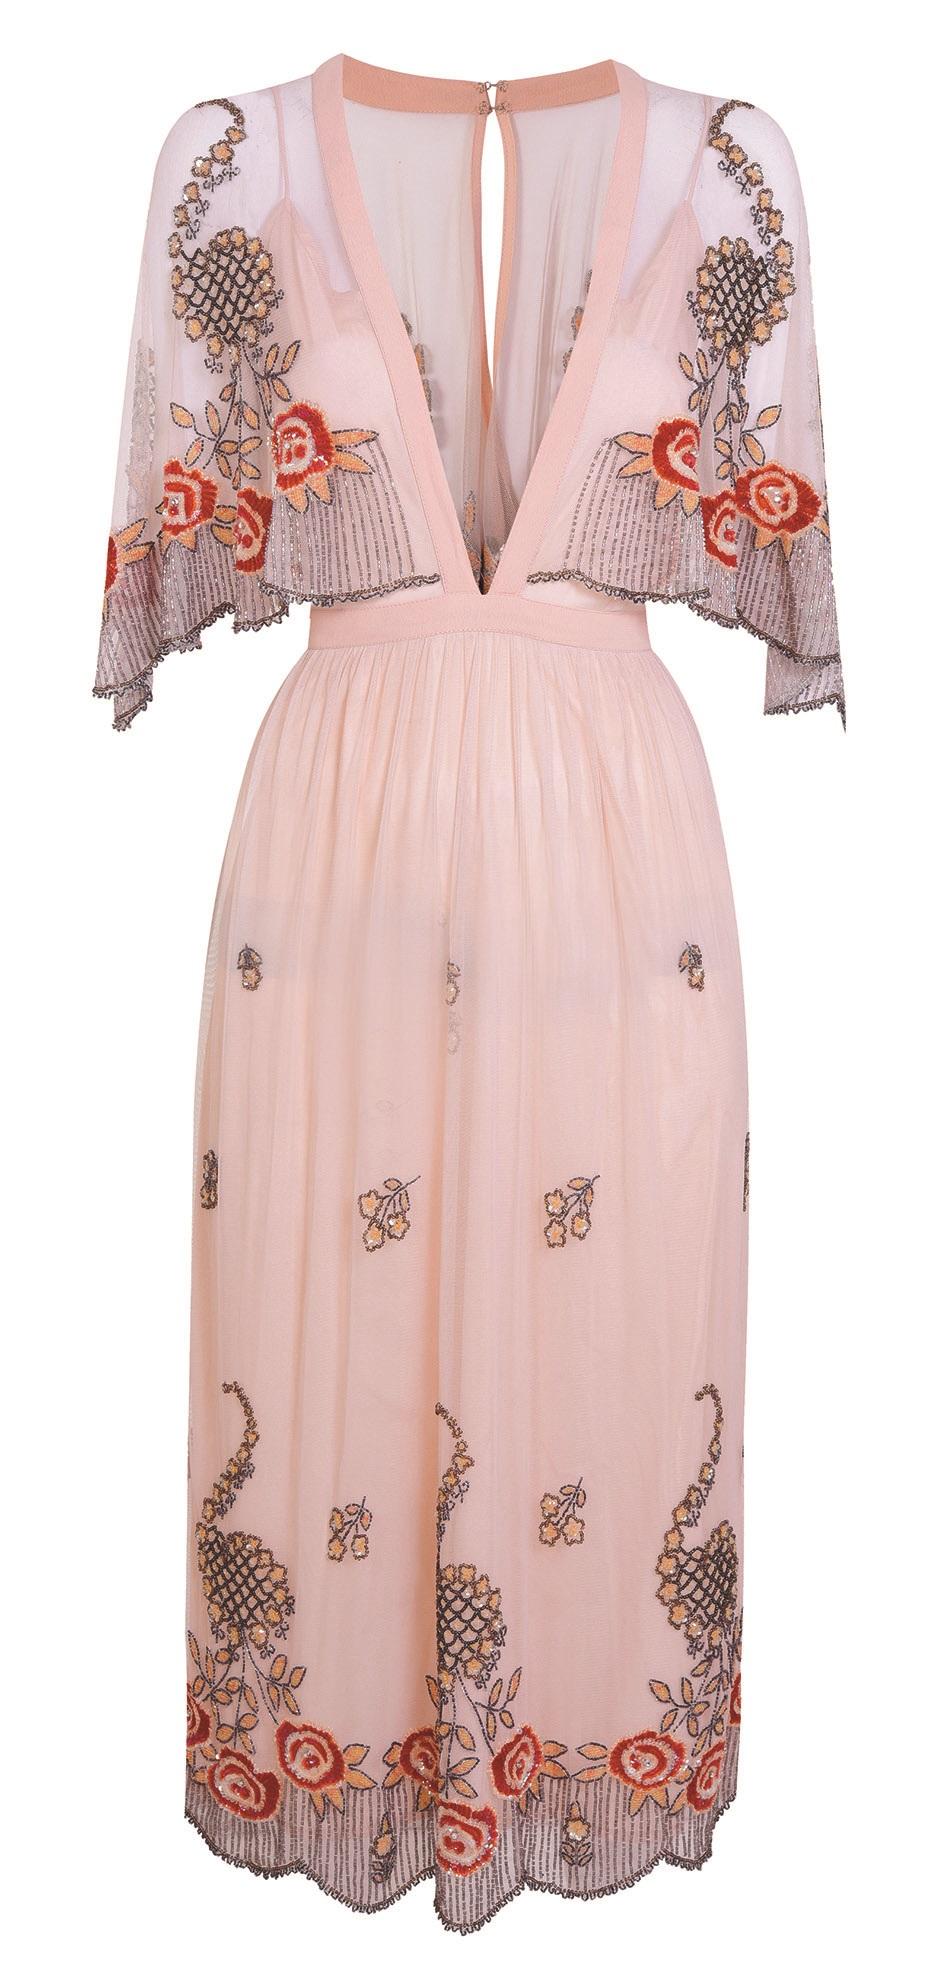 Topshop, Dress, £220